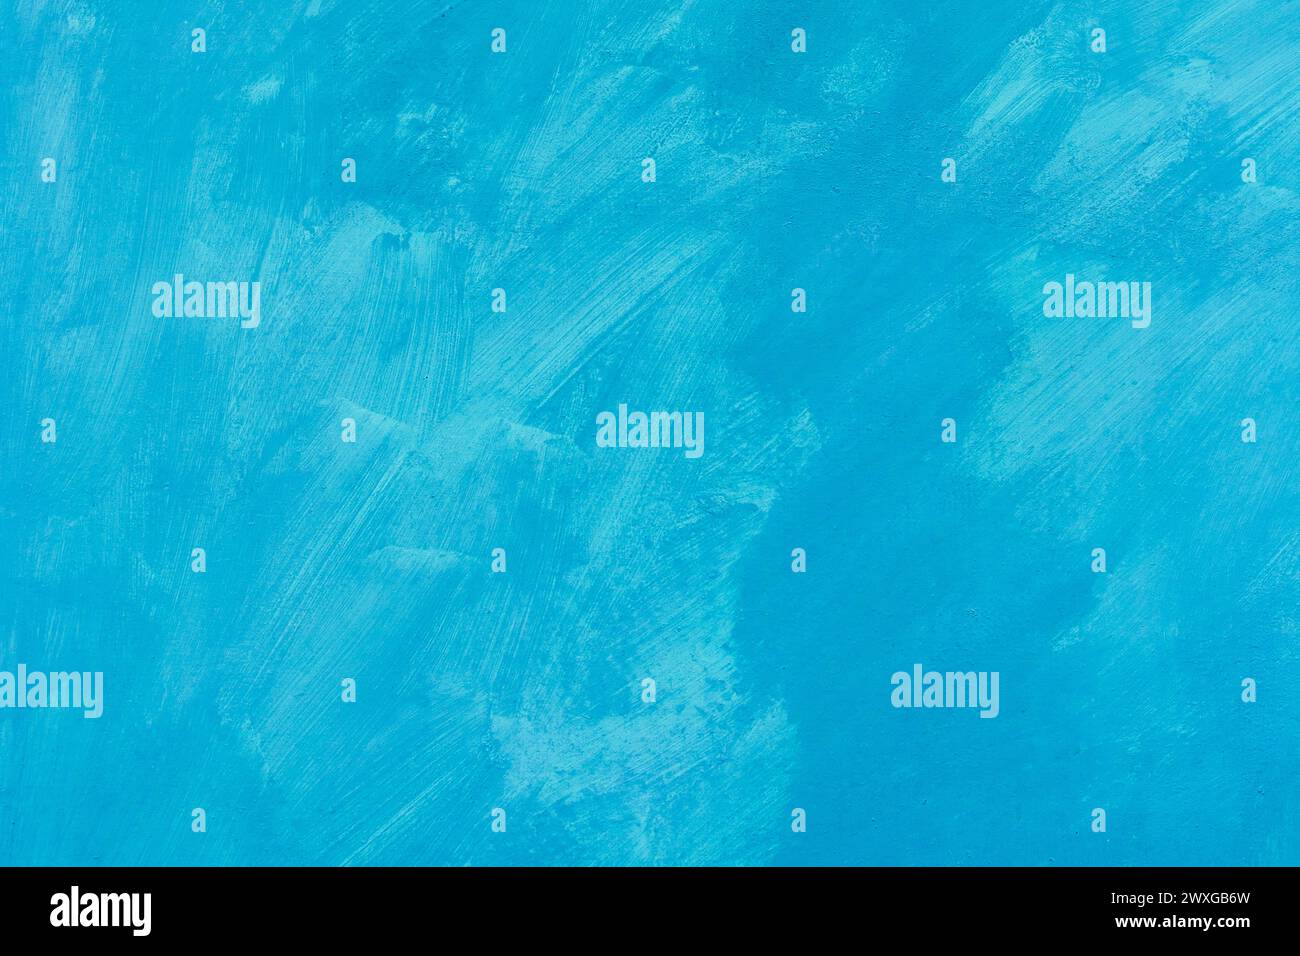 Azul abstracto patrón de pintura de pared de metal superficie sólida textura de fondo áspero fondo marino. Foto de stock